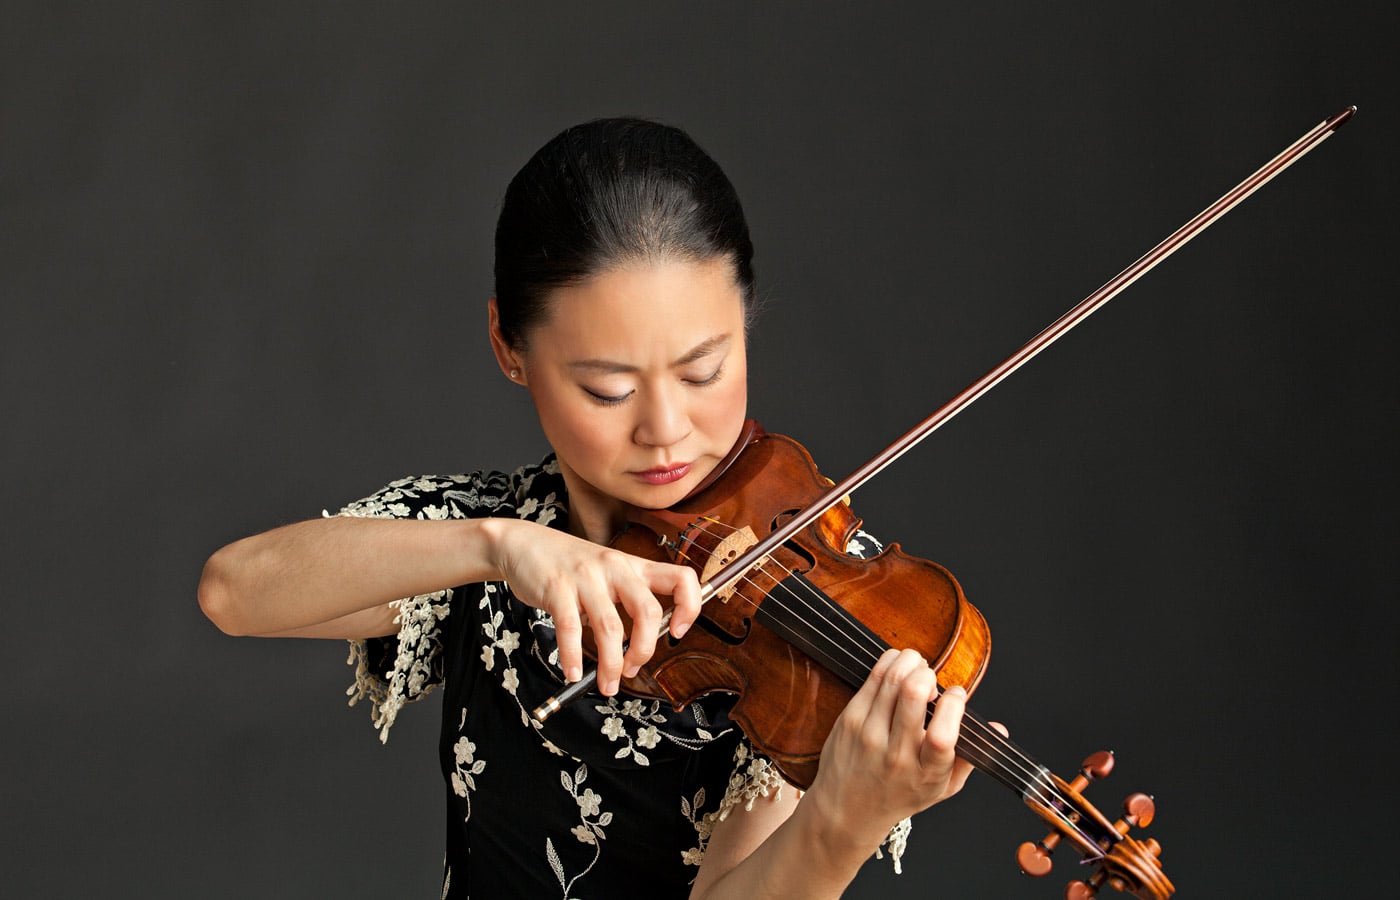 Photo of violinist Midori playing her violin